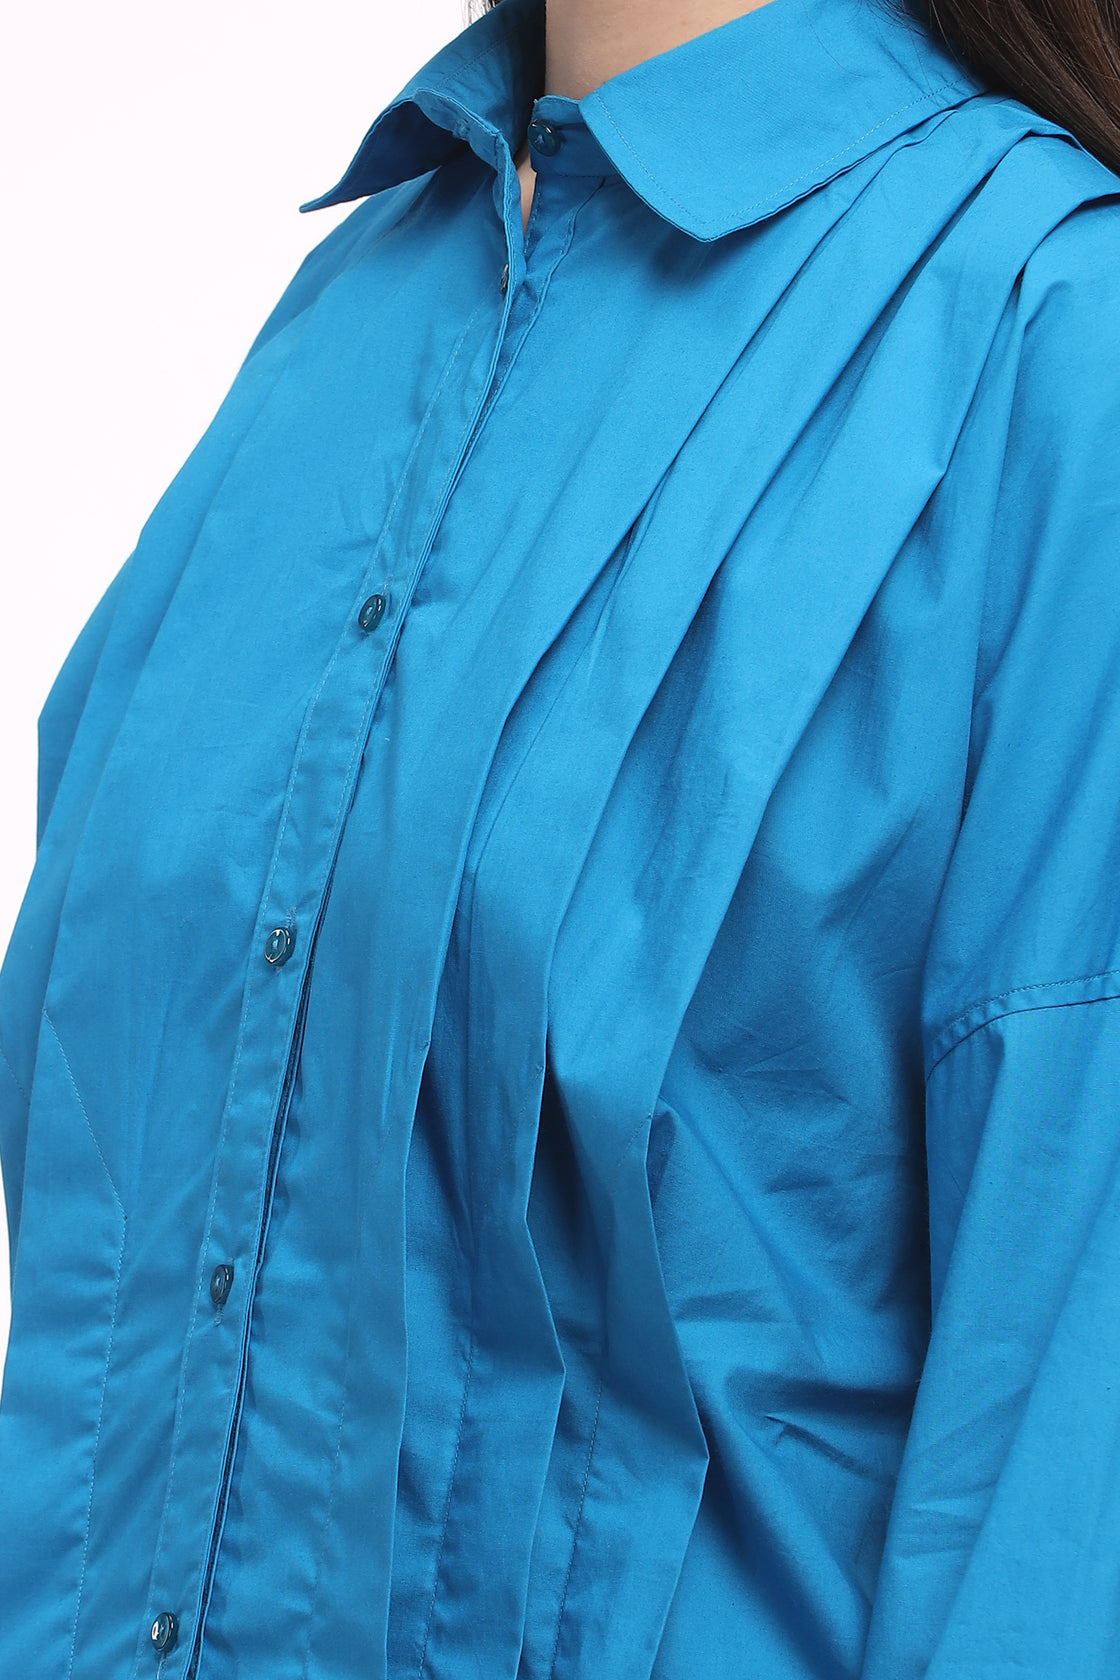 Sia Pleated Blue Shirt